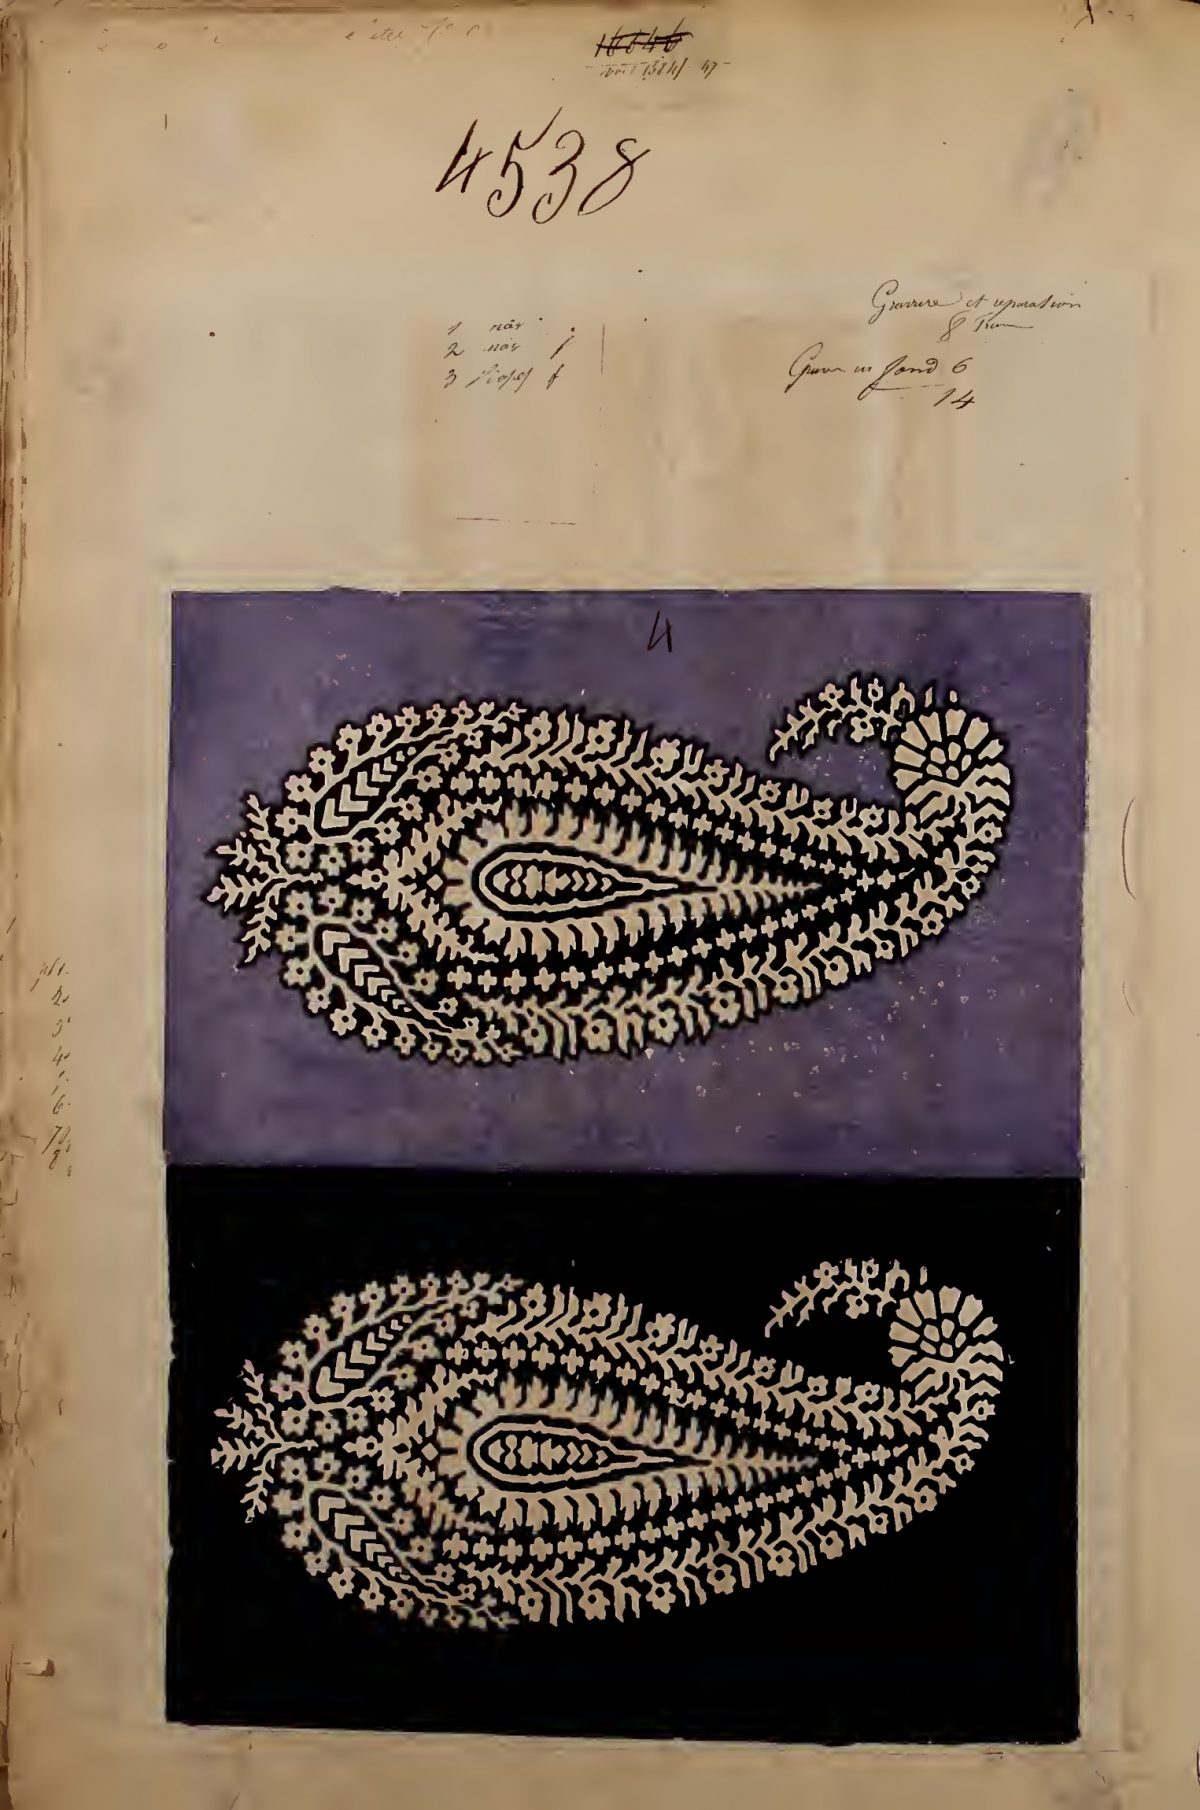 French textile design. Maison Robert. 1863